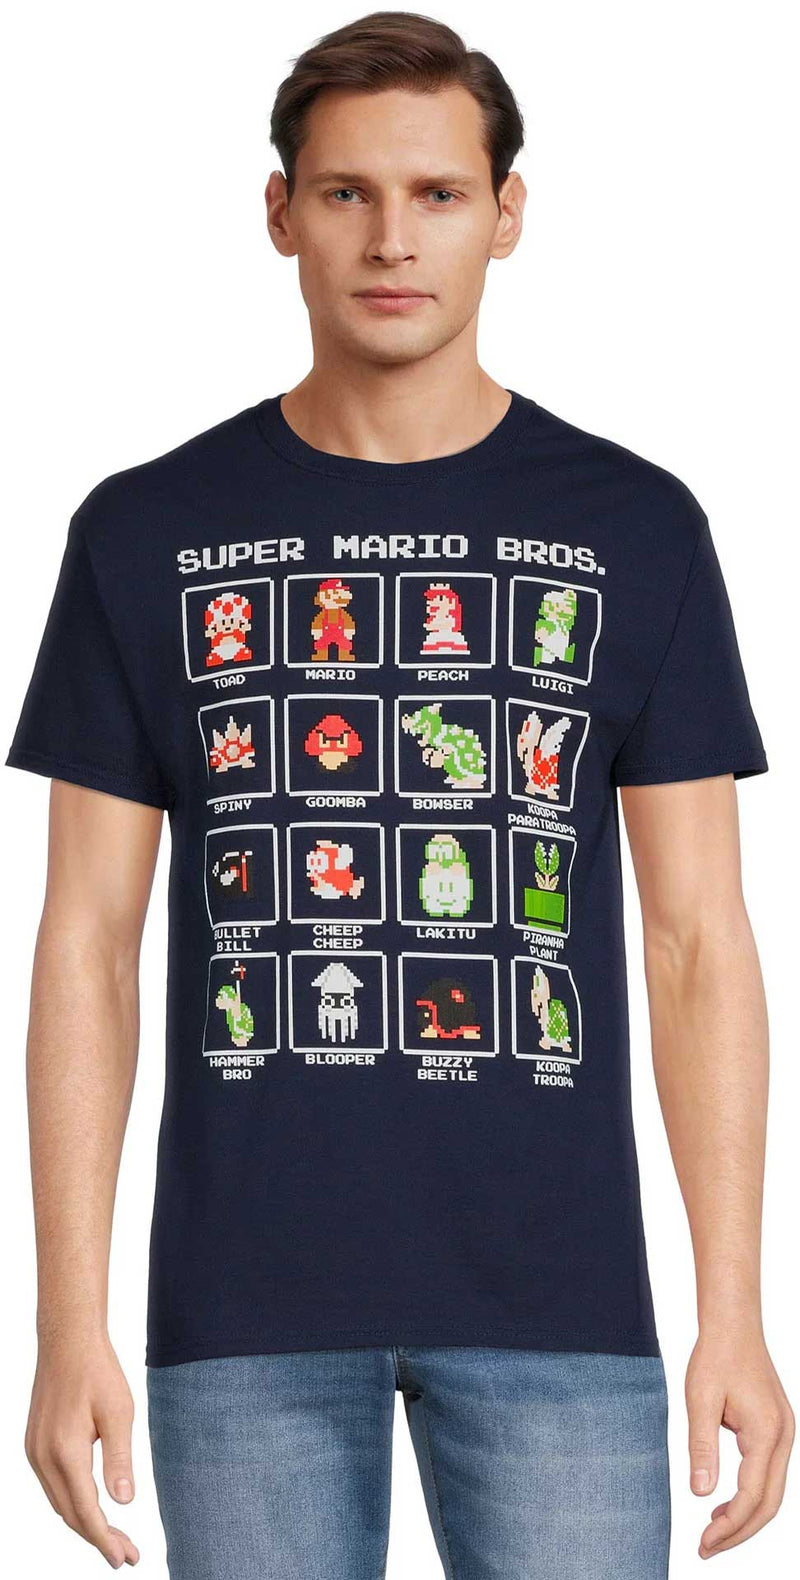 Super Mario Bros. Pixel Characters Shirt, Navy Blue